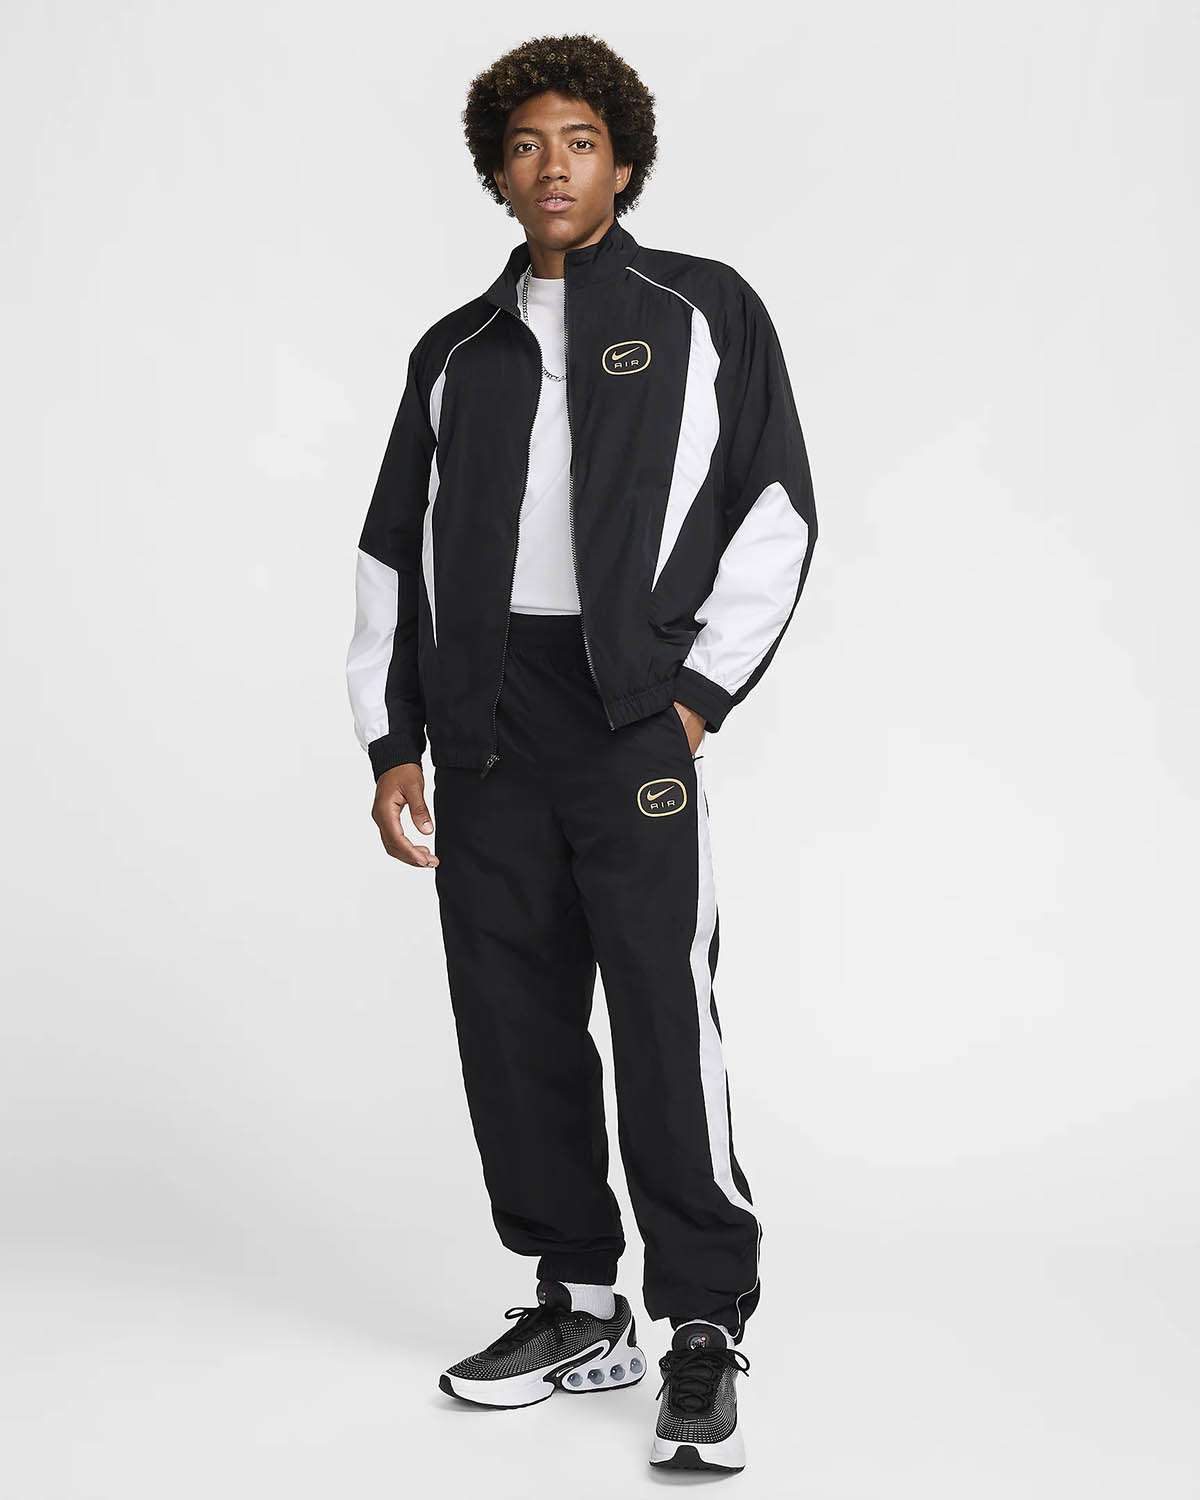 Nike Air Woven Jacket and Pants Black Metallic Goldwebp